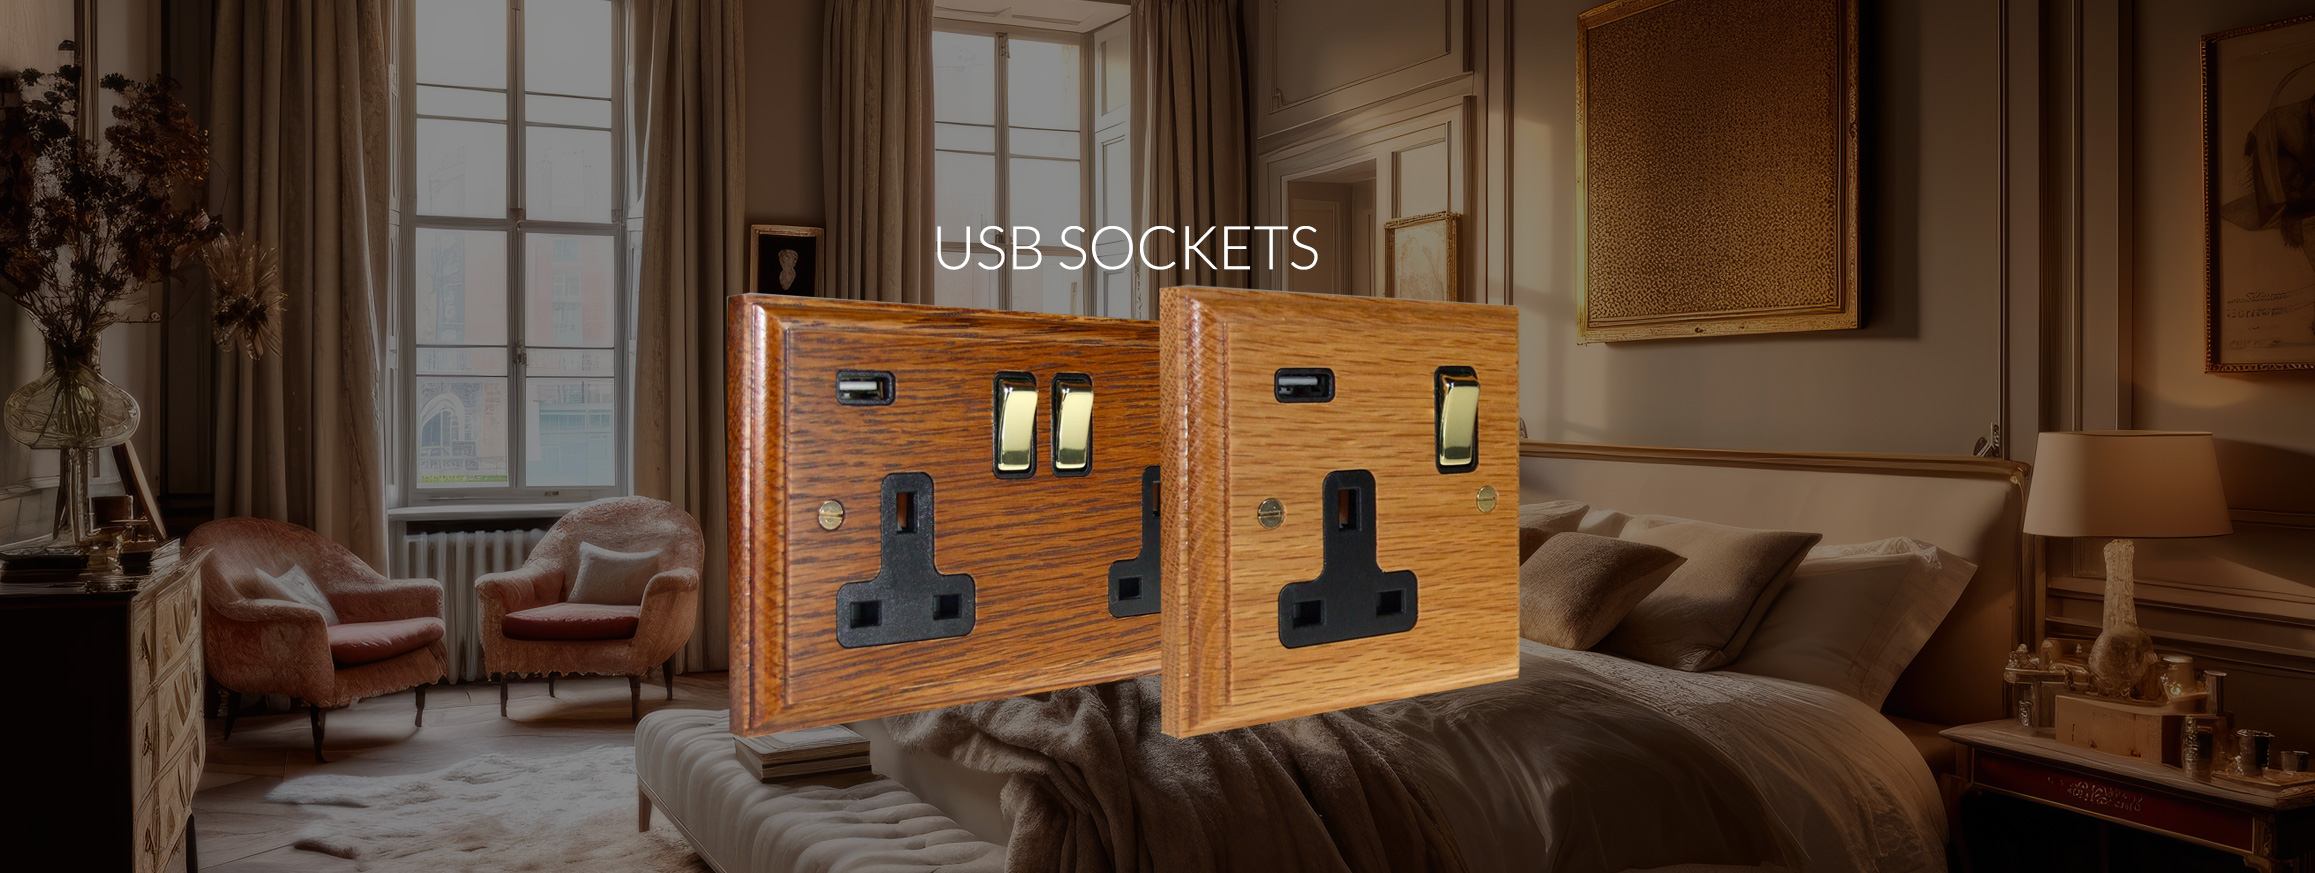 USB-sockets-banner